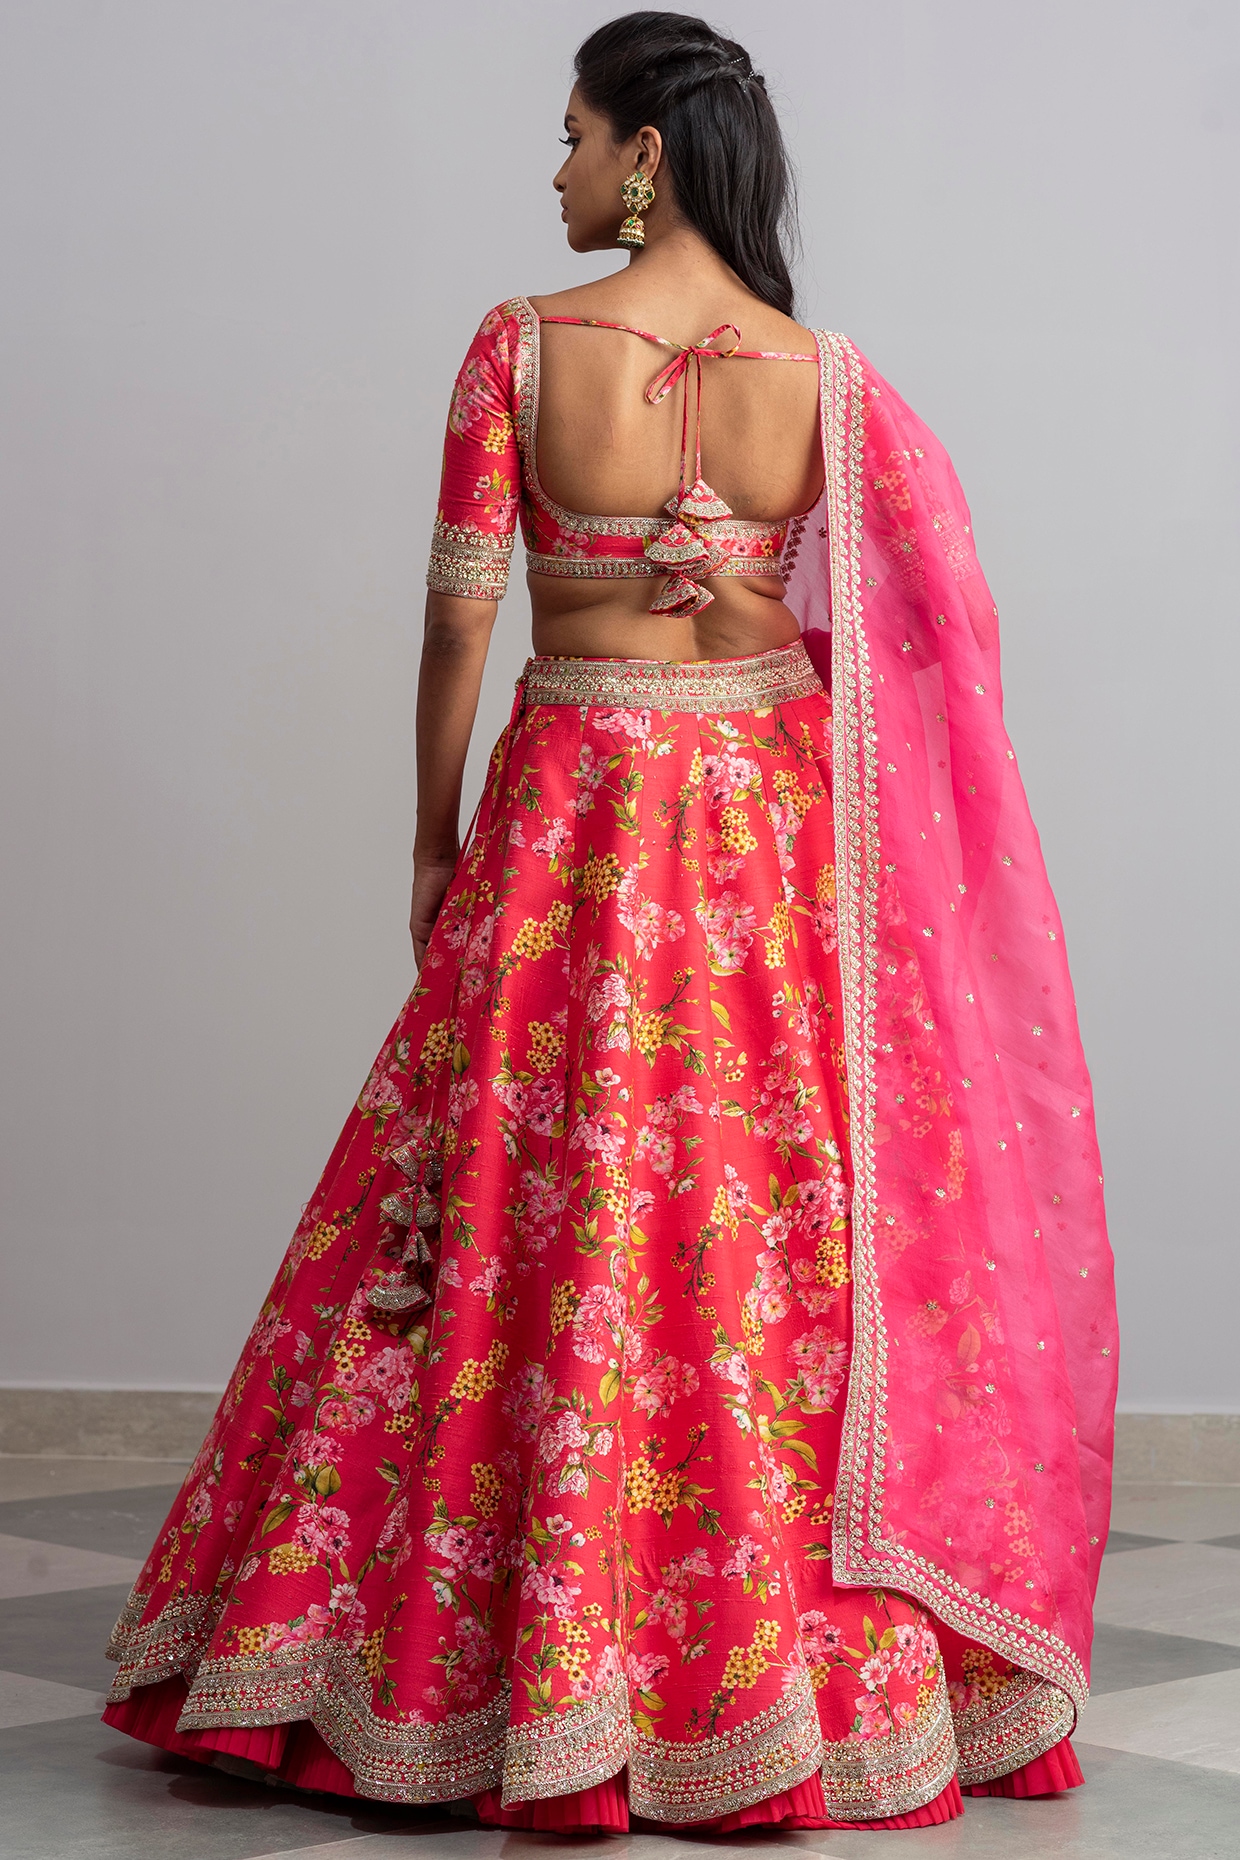 Ritu Varma in Anushree Reddy Lehenga – South India Fashion